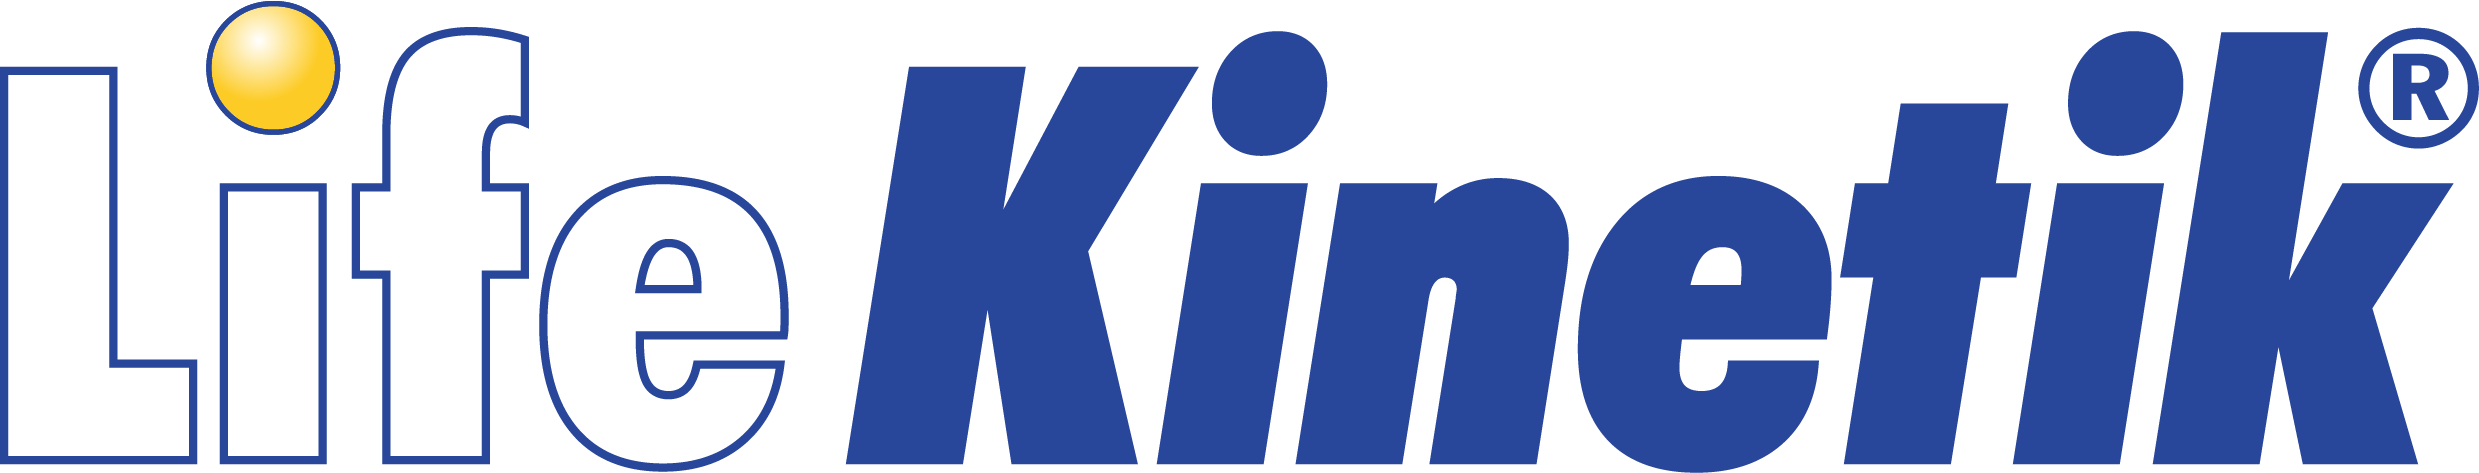 https://lifekinetik-muench.de/wp-content/uploads/2021/09/Life-Kinetik-Logo-Schriftzug.png